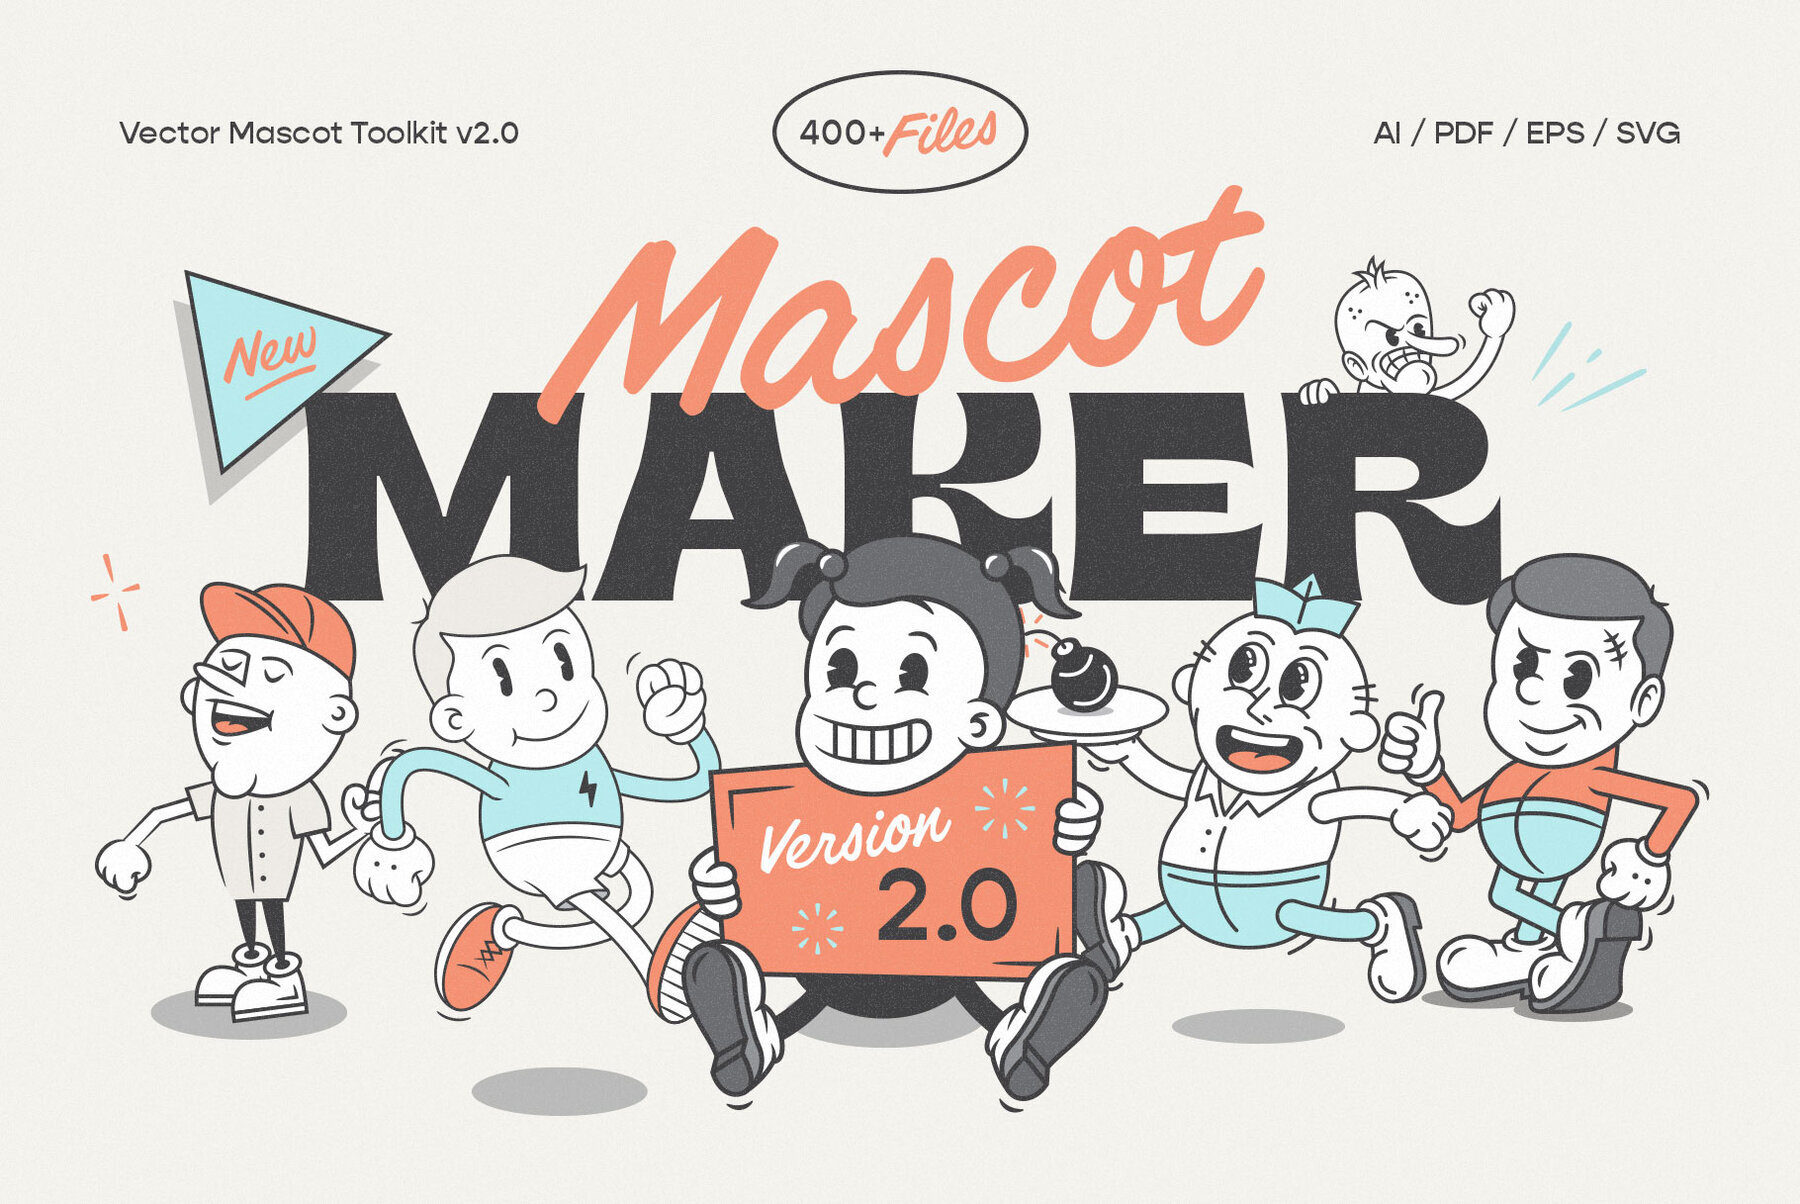 Mascot Maker v2.0 - Vintage Vector Character Toolkit